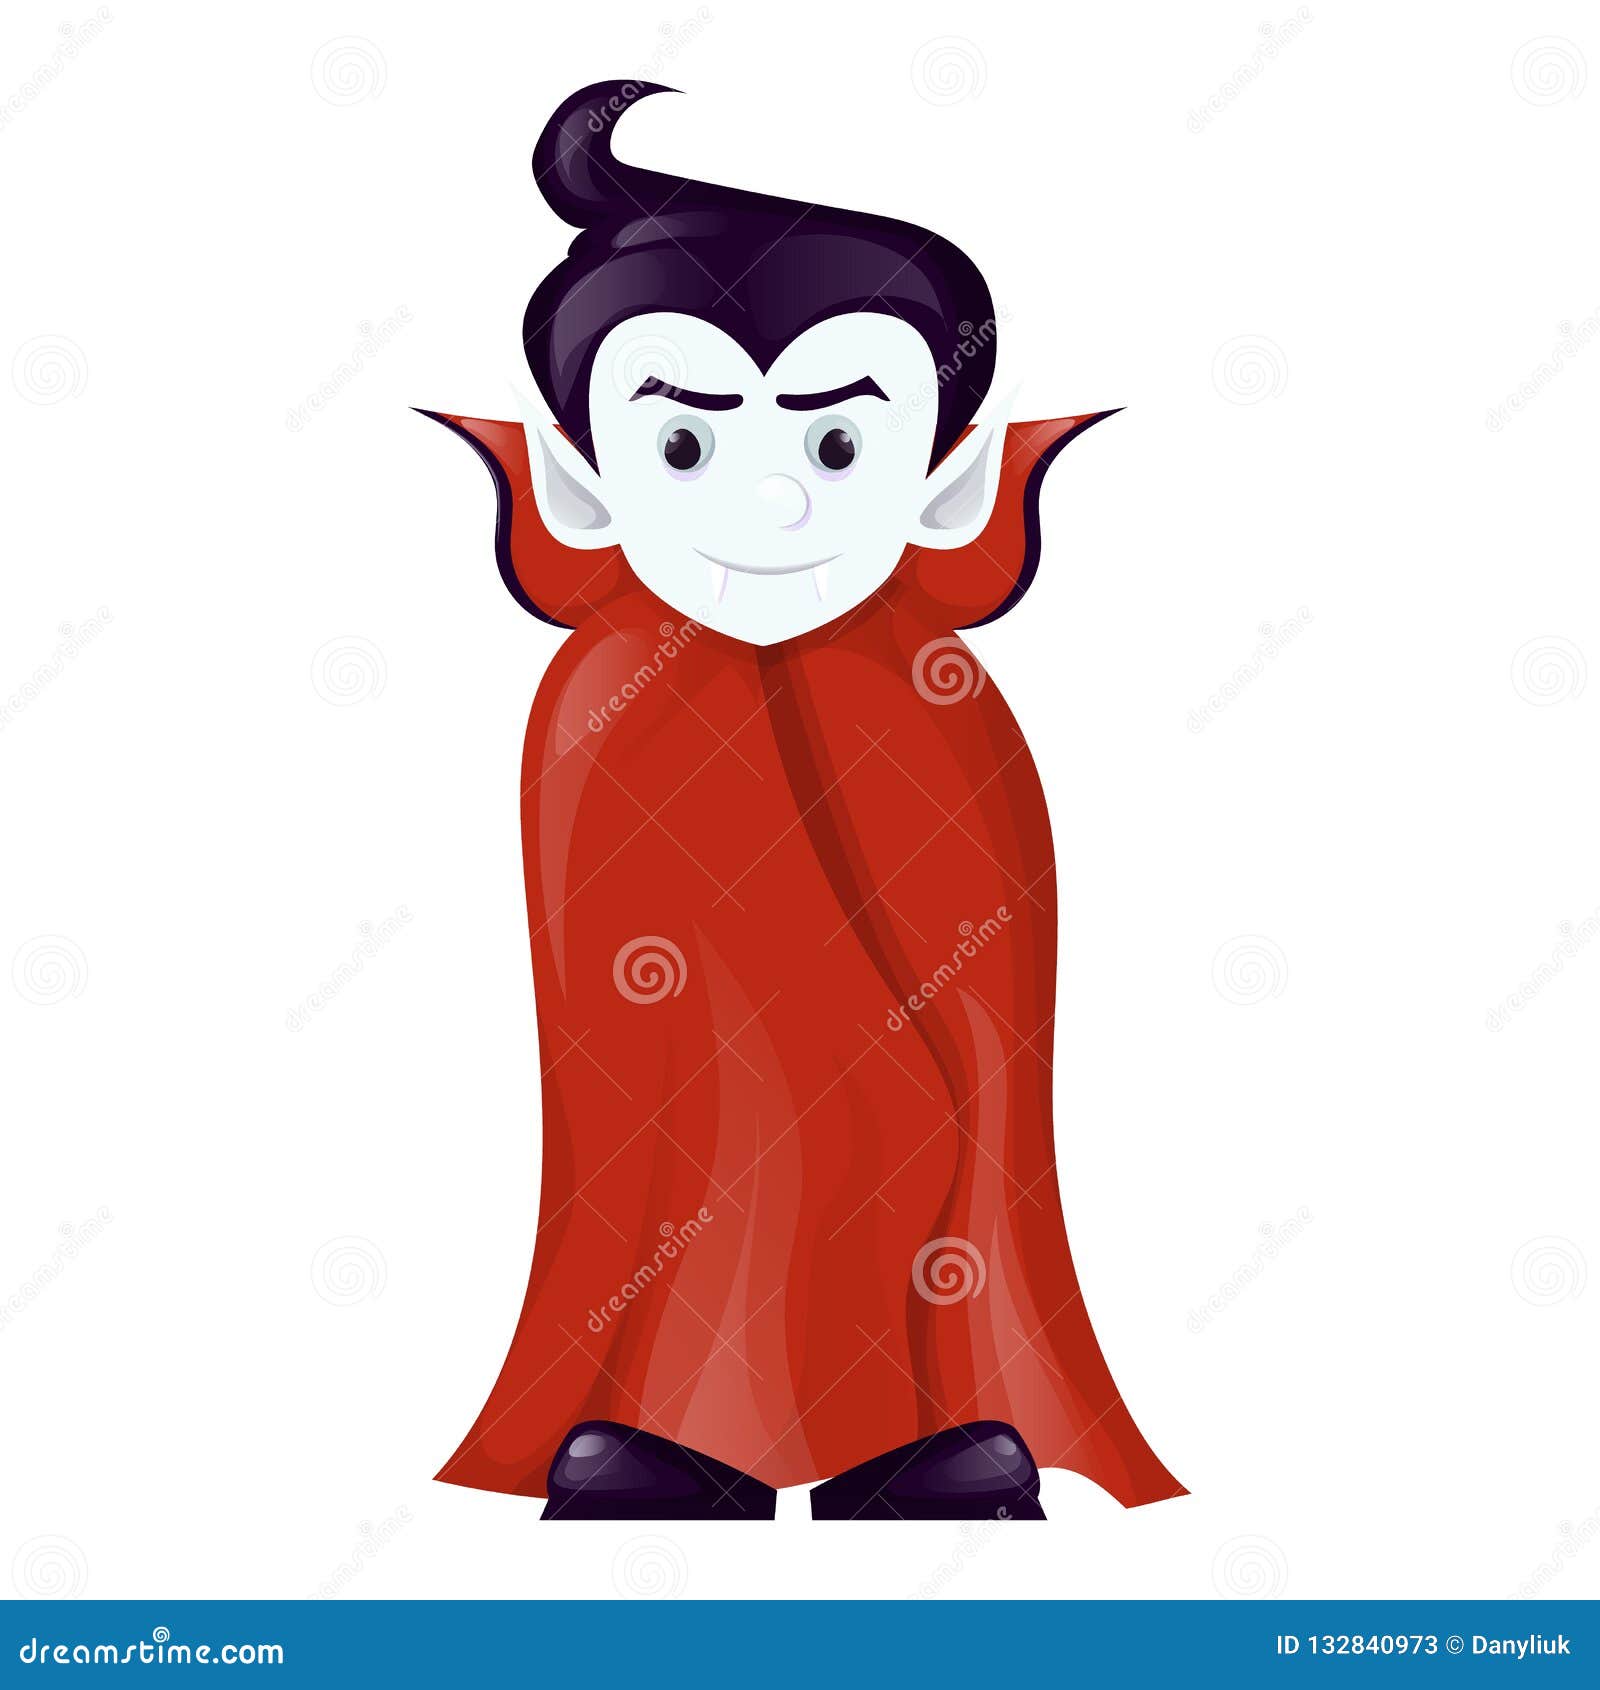 Halloween Dracula Vampire Costume Cartoon Character Vector Illustration.  Stock Vector - Illustration of face, card: 132840973